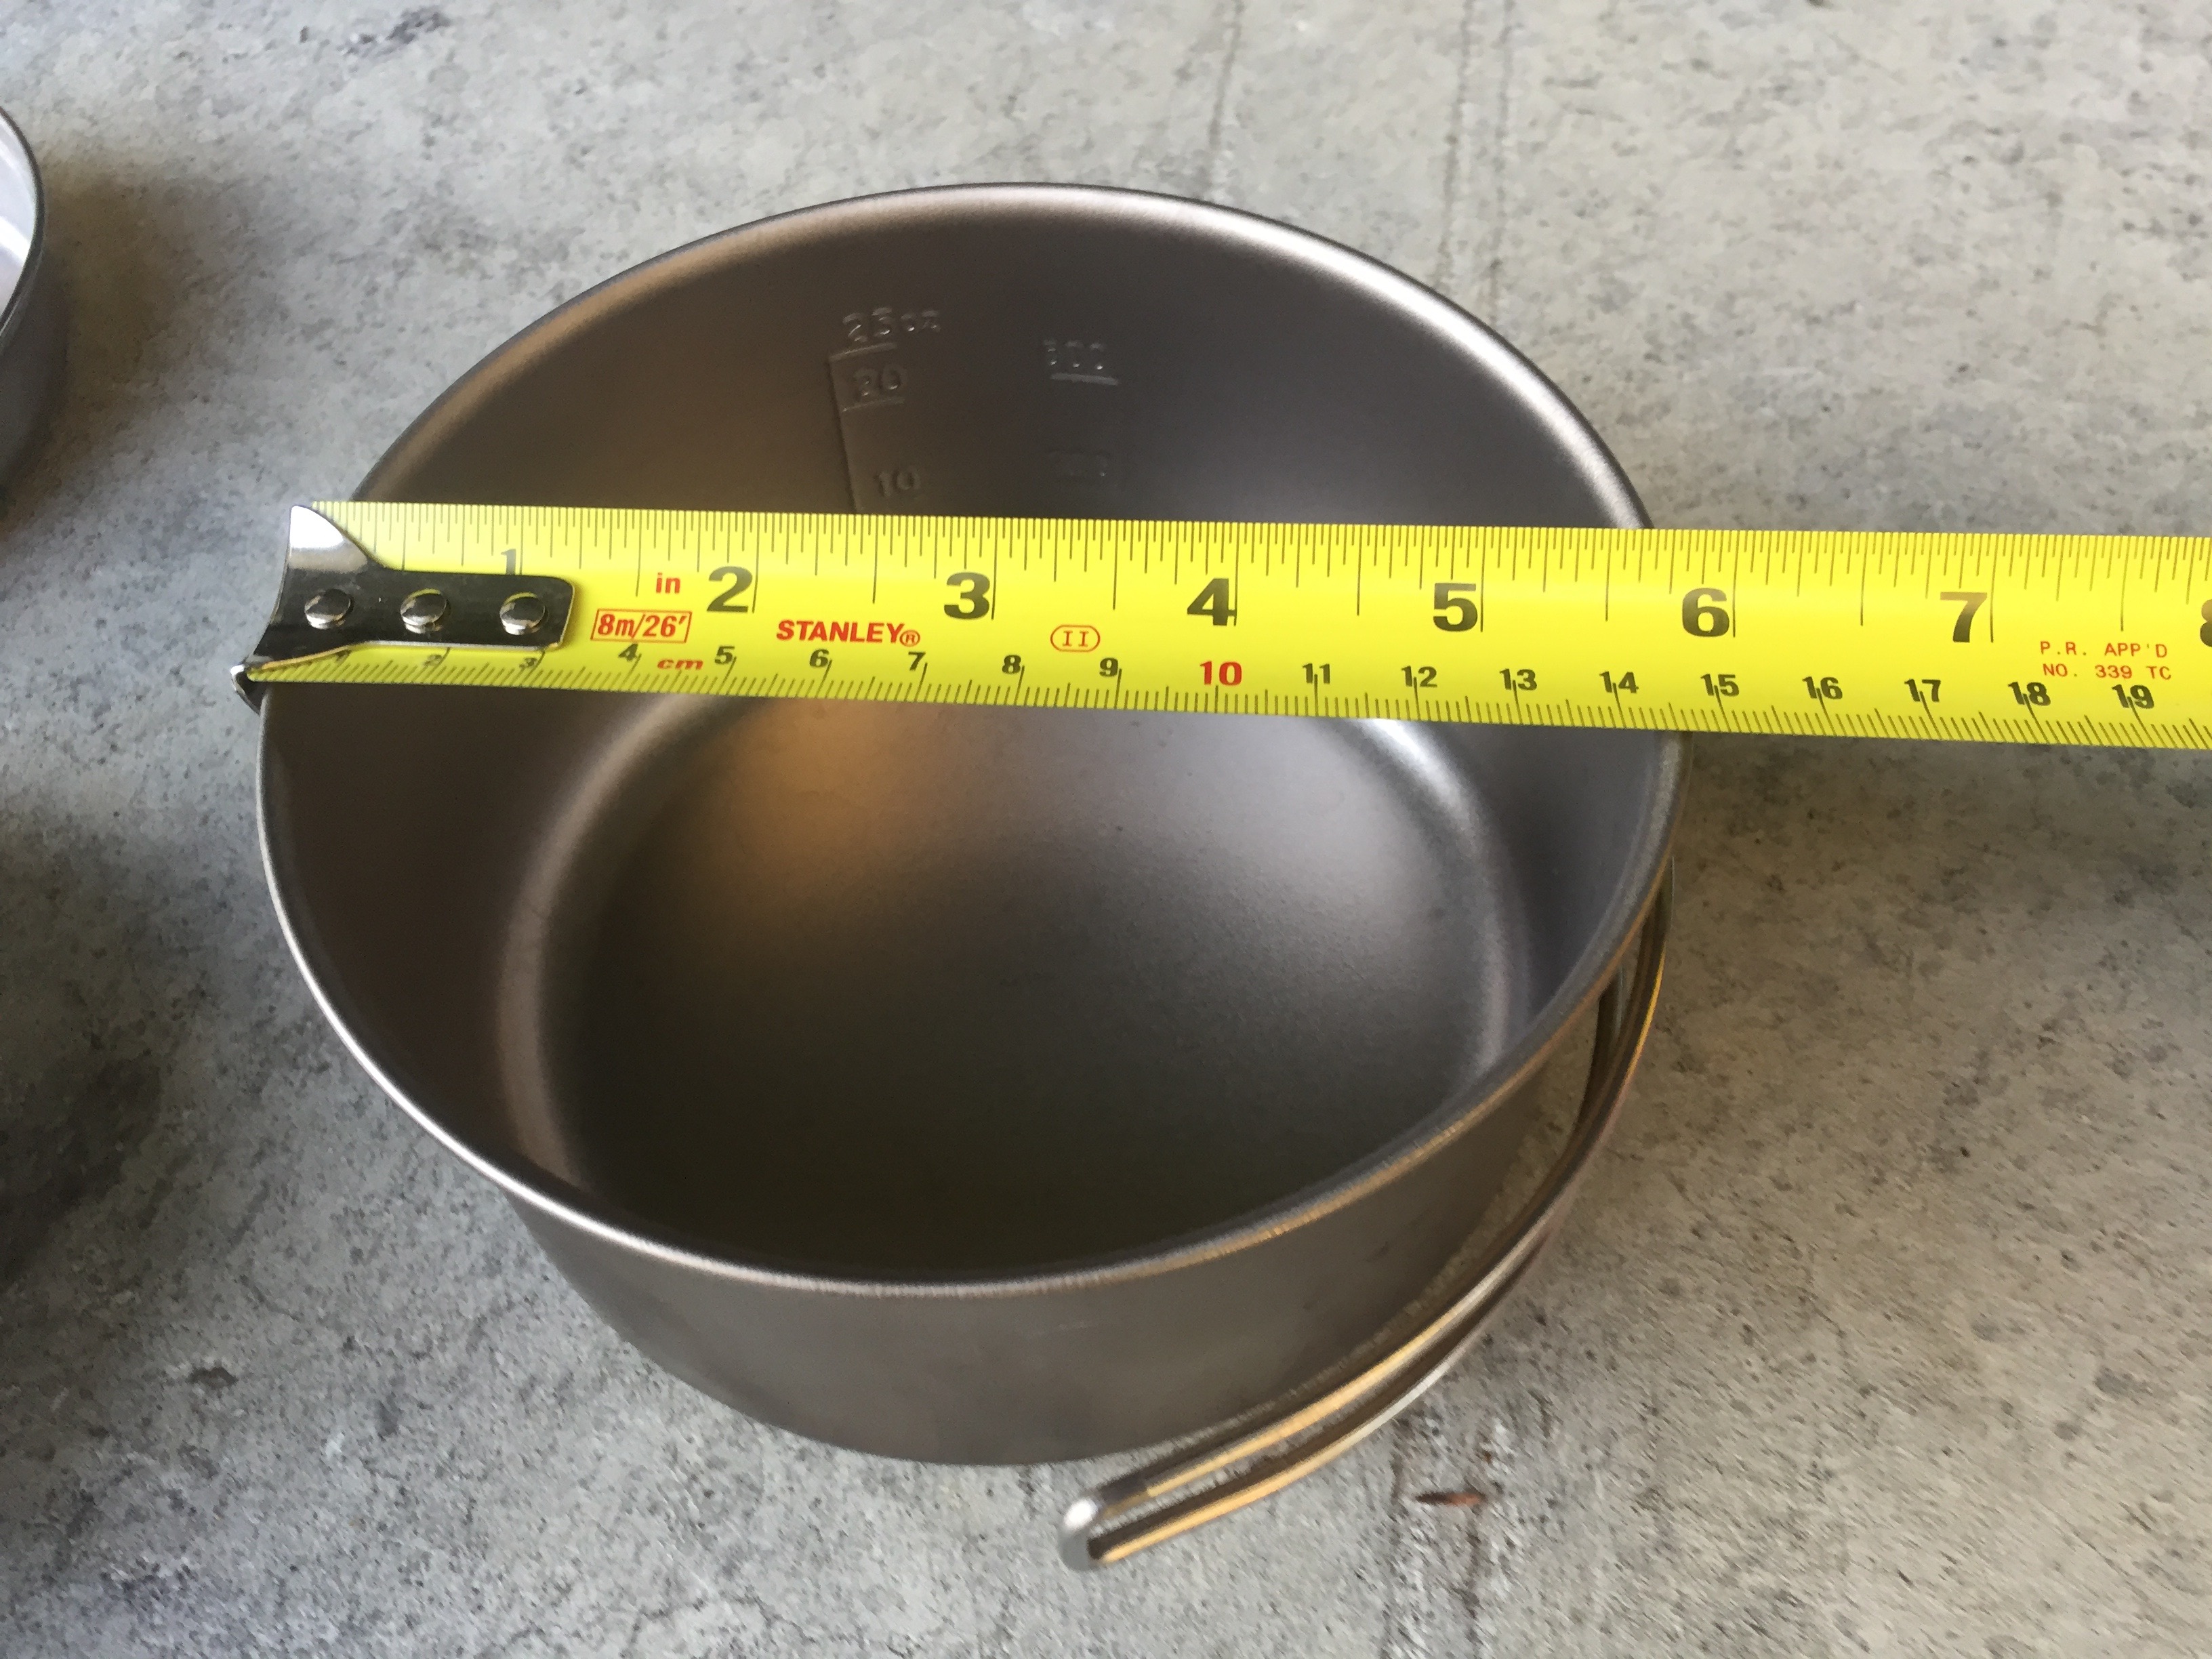 Small Fry Pan for Multi Compact Cookset Titanium – Snow Peak